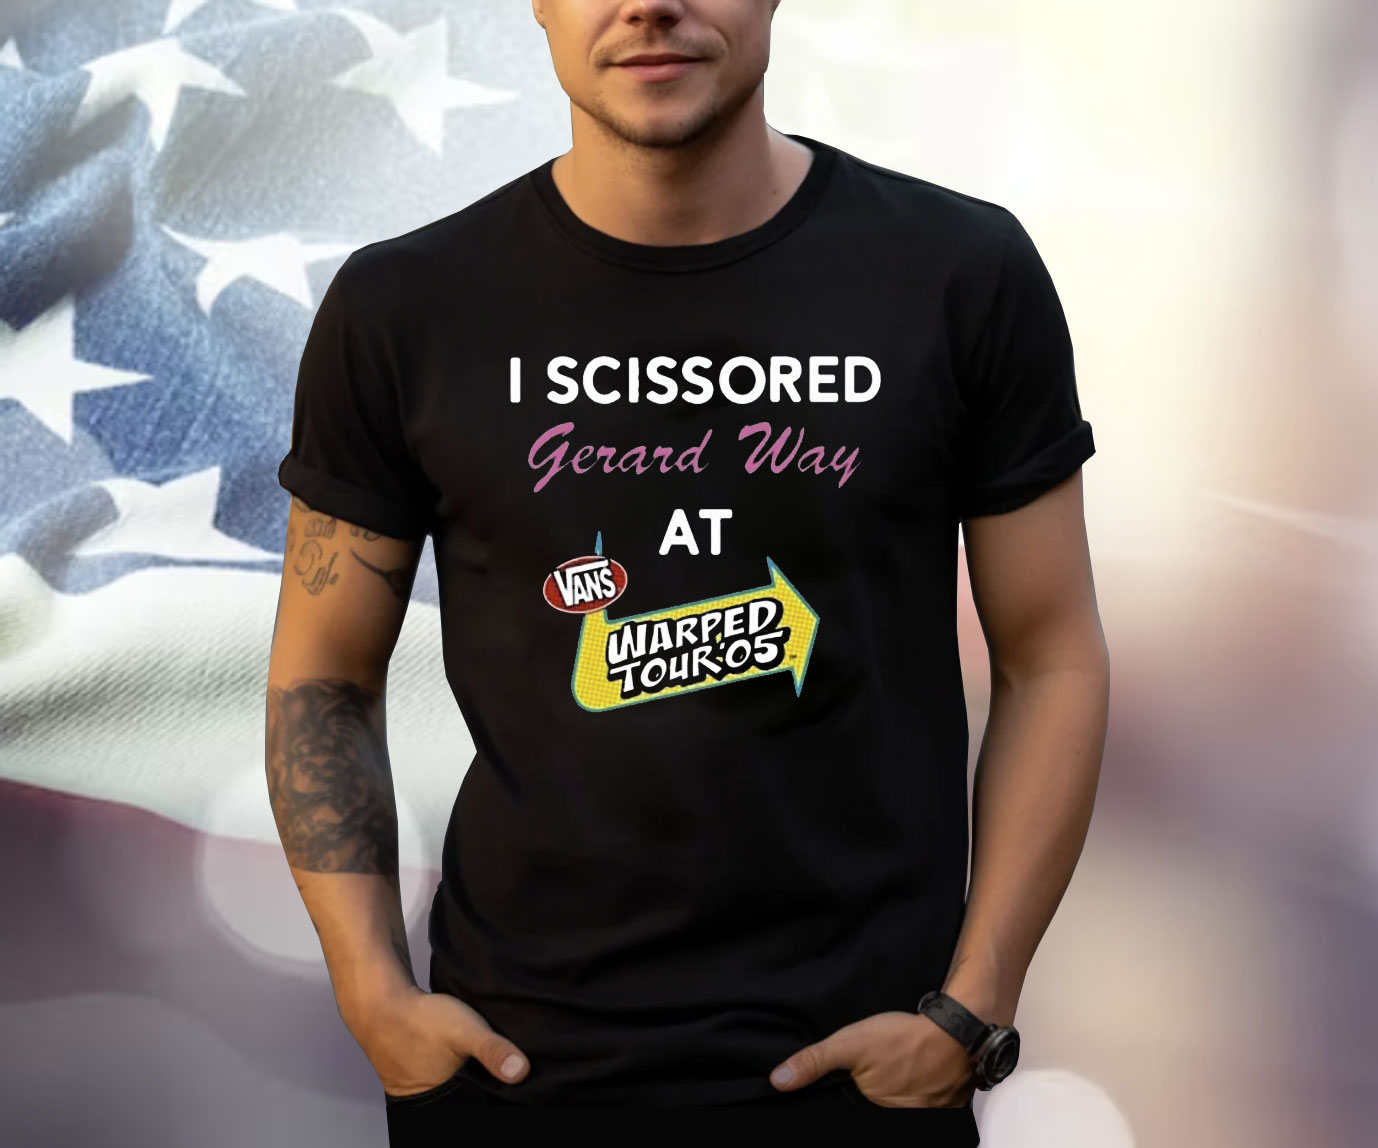 I Scissored Gerard Way At Vans Warped Tour05 T Shirt